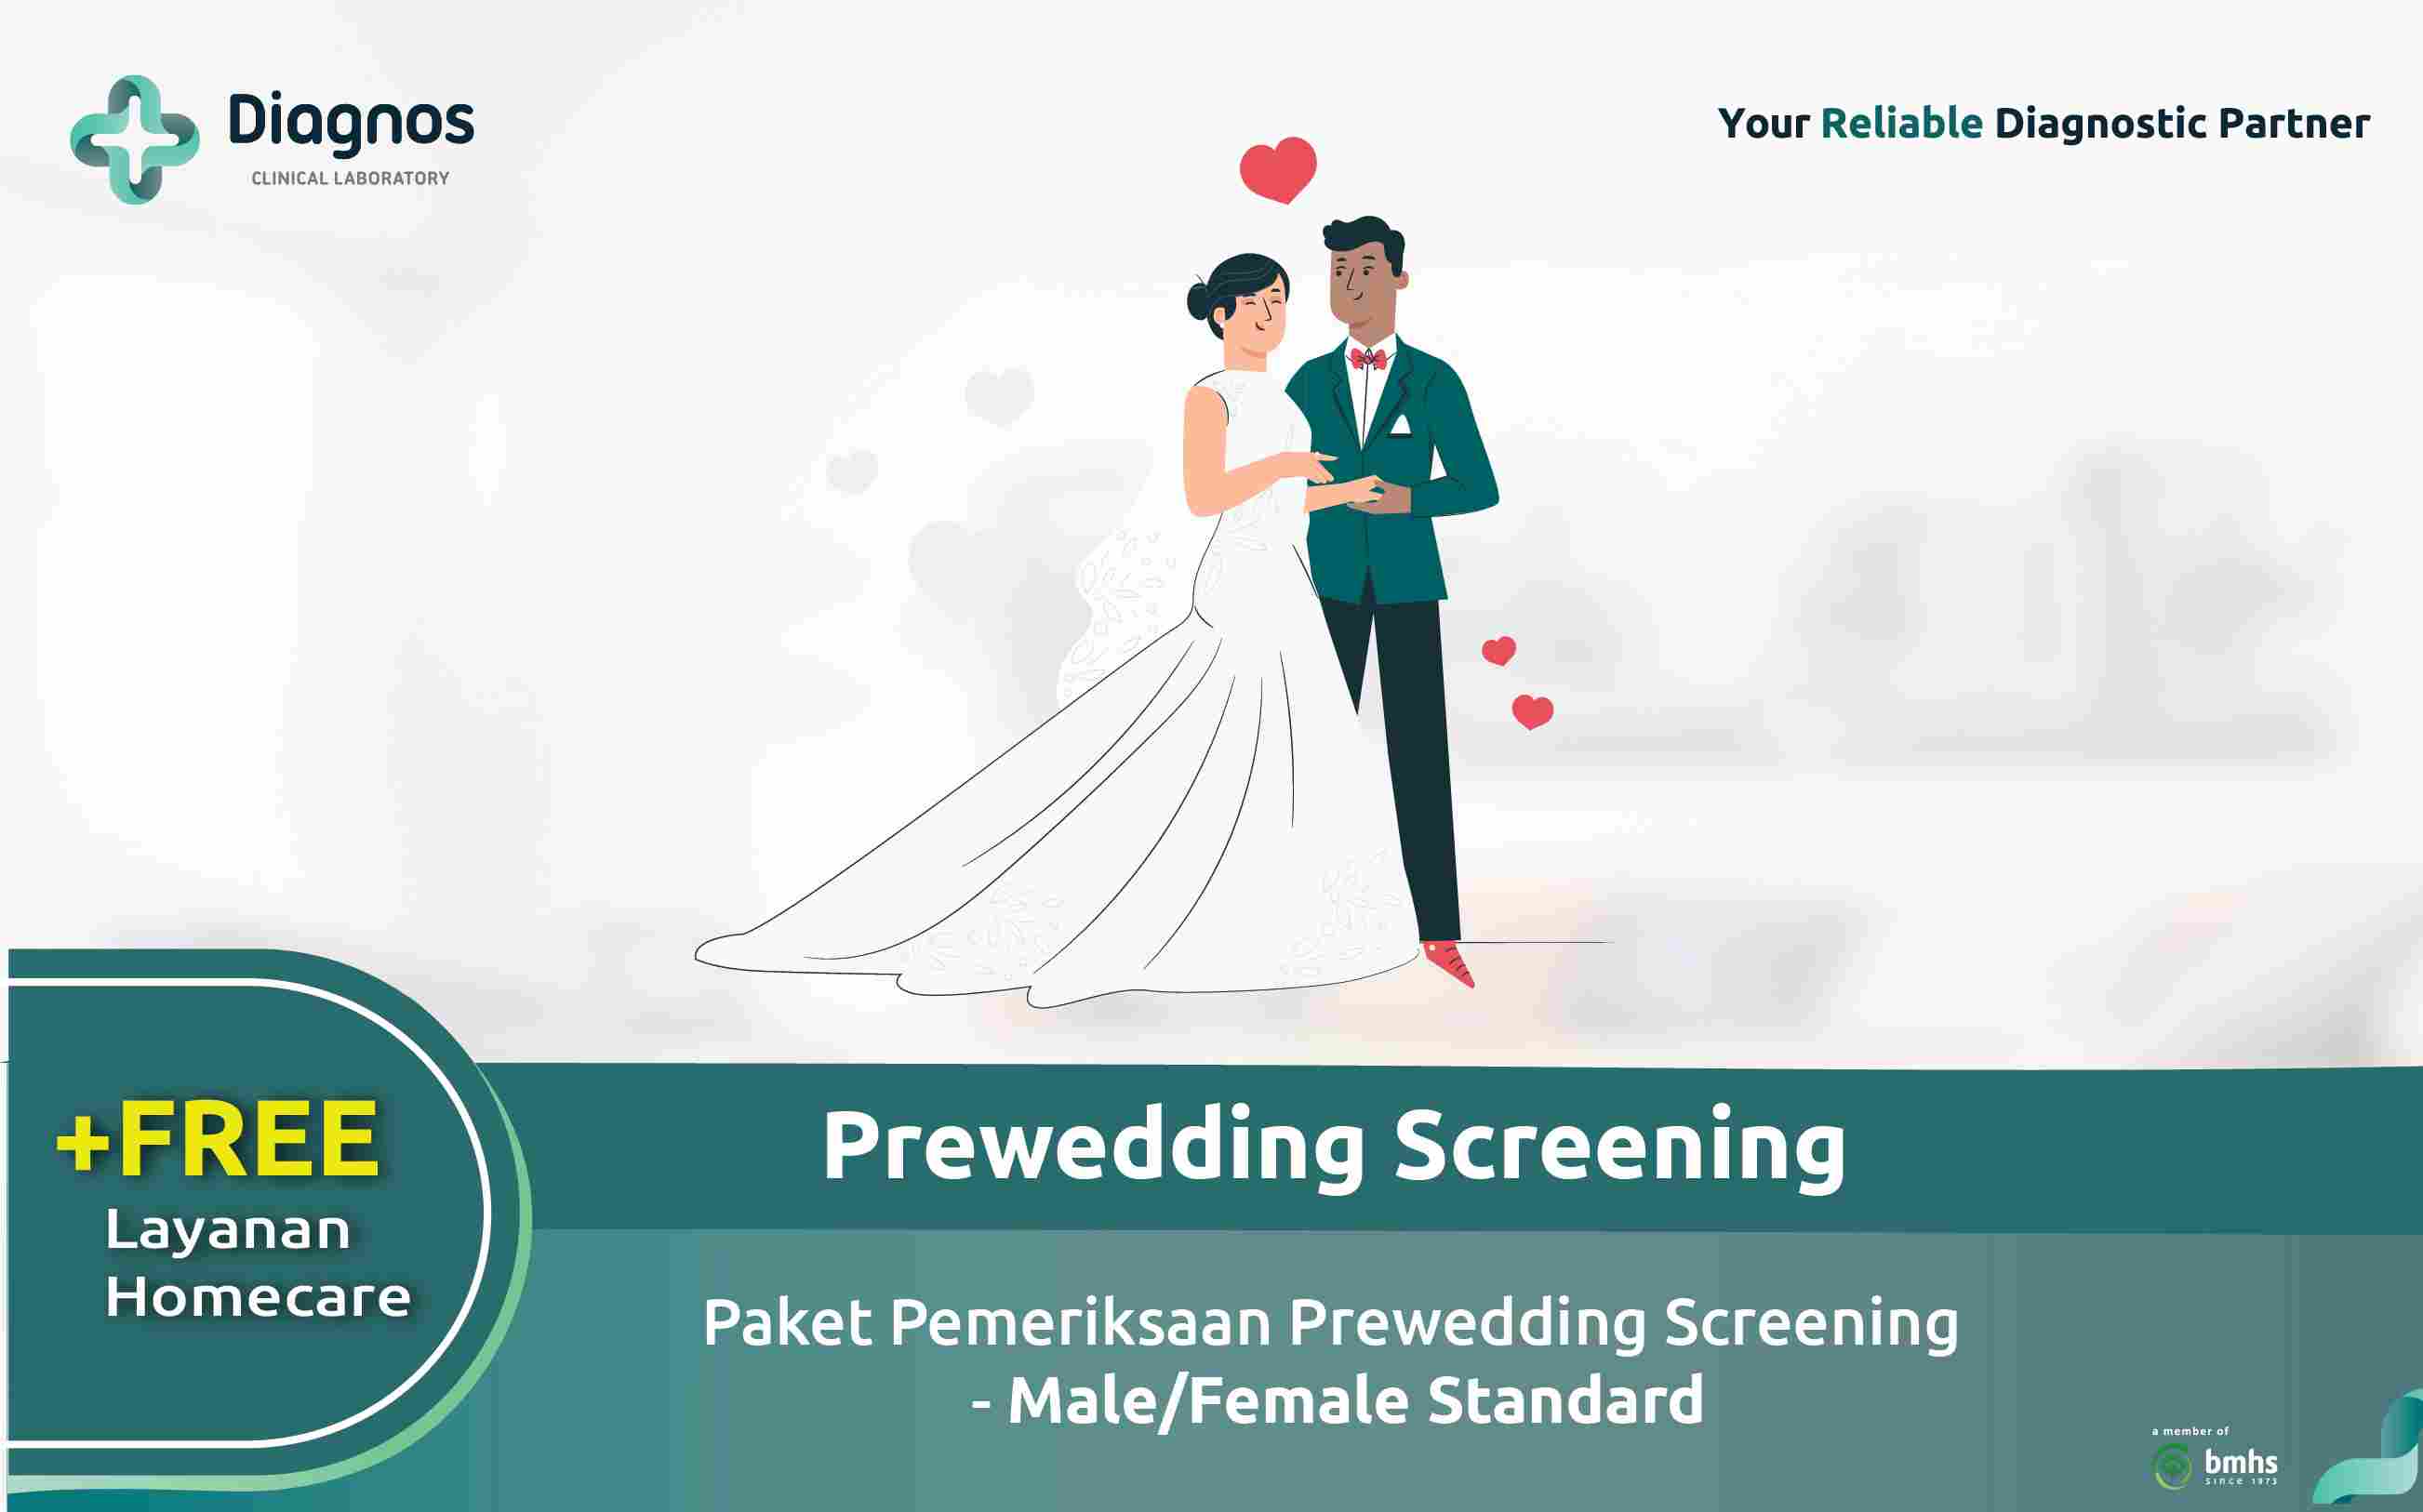 Prewedding Screening - Male/Female Standard